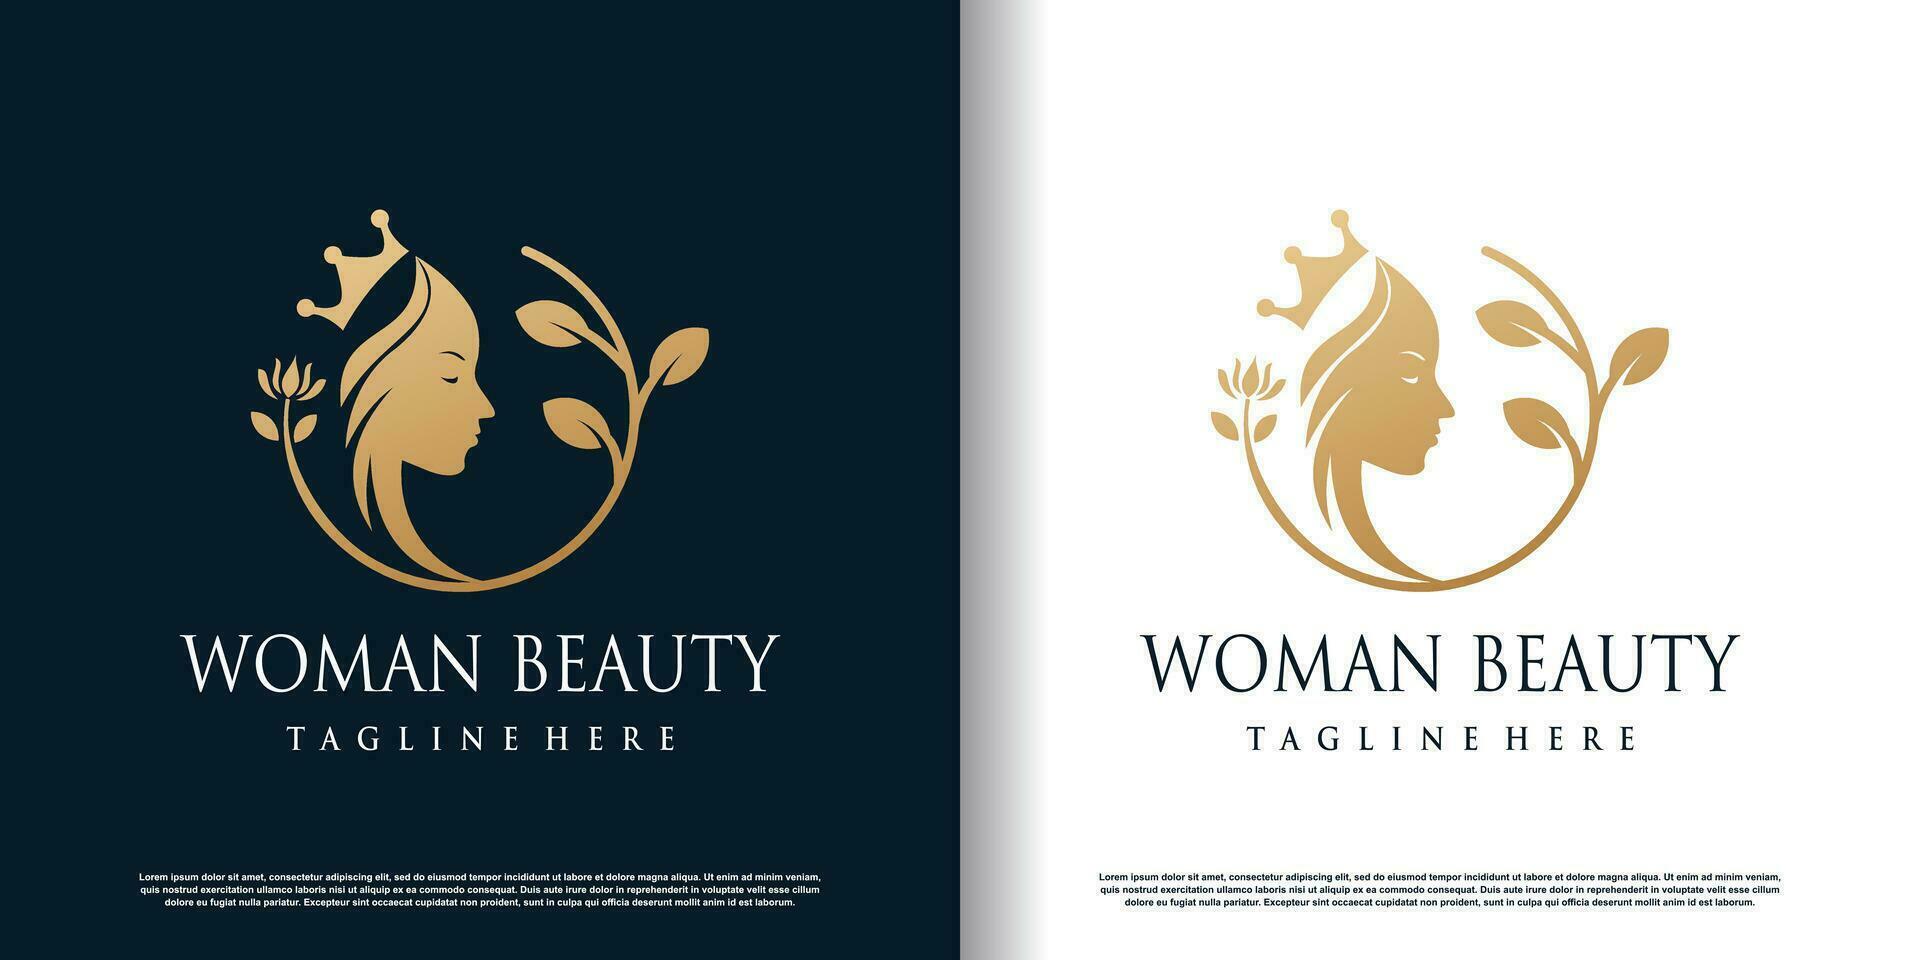 Nature beauty logo design with unique style Premium Vector